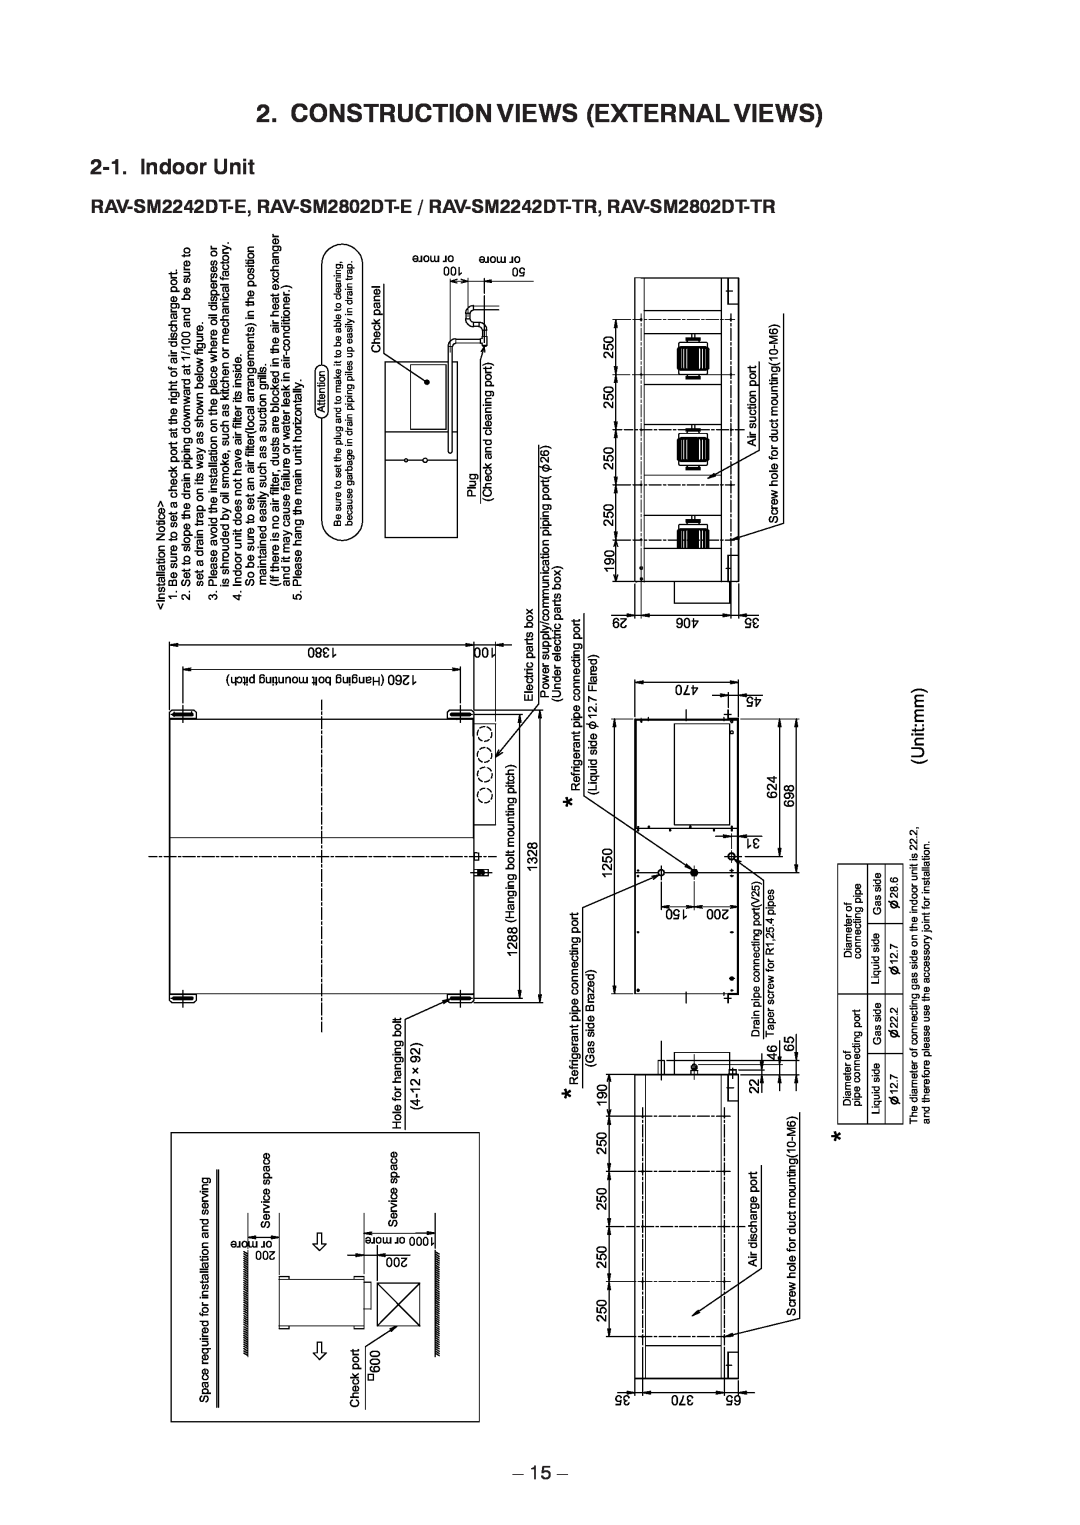 Toshiba RAV-SM2802DT-E, RAV-SM2242DT-TR Construction Views External Views, 15, Indoor Unit, SM2242DT-E, Unit:mm 